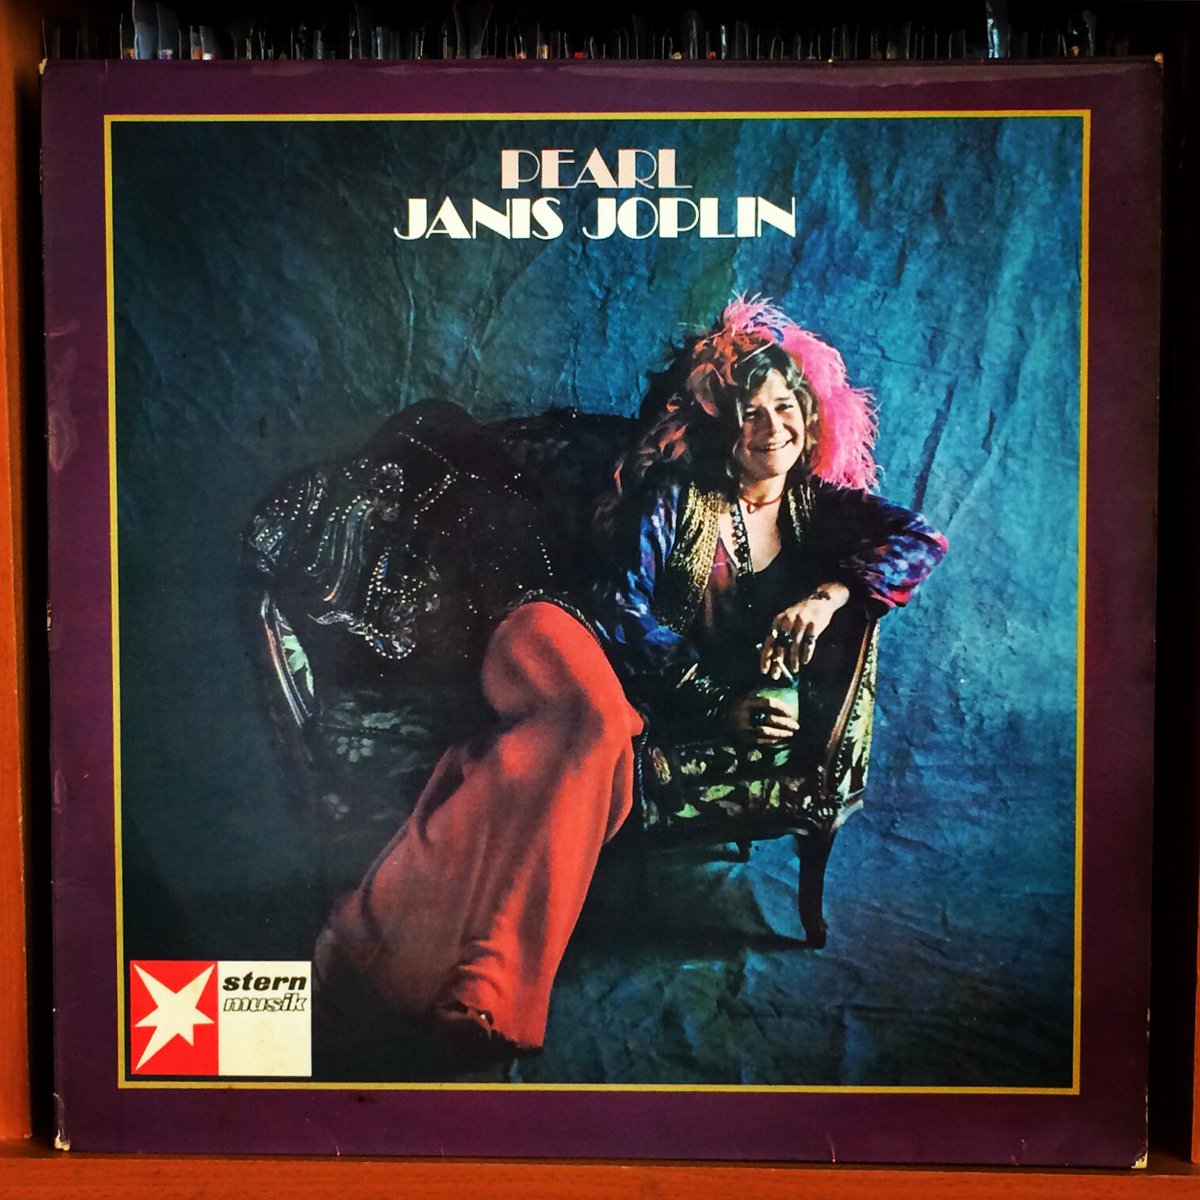 Cover des posthumen Albums Pearl von Janis Joplin (1971)